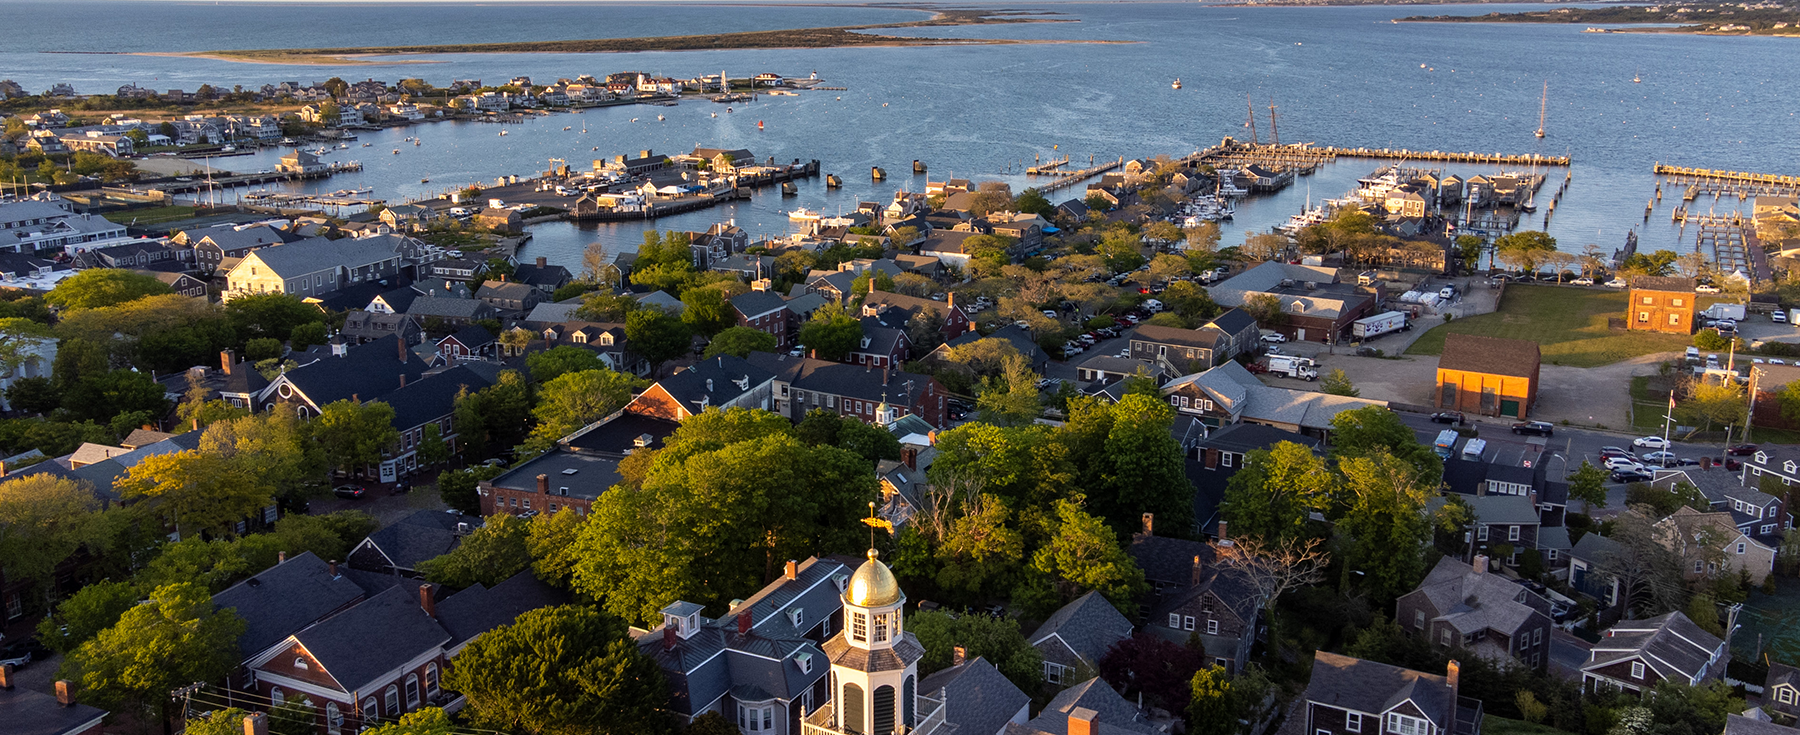 Town of Nantucket 